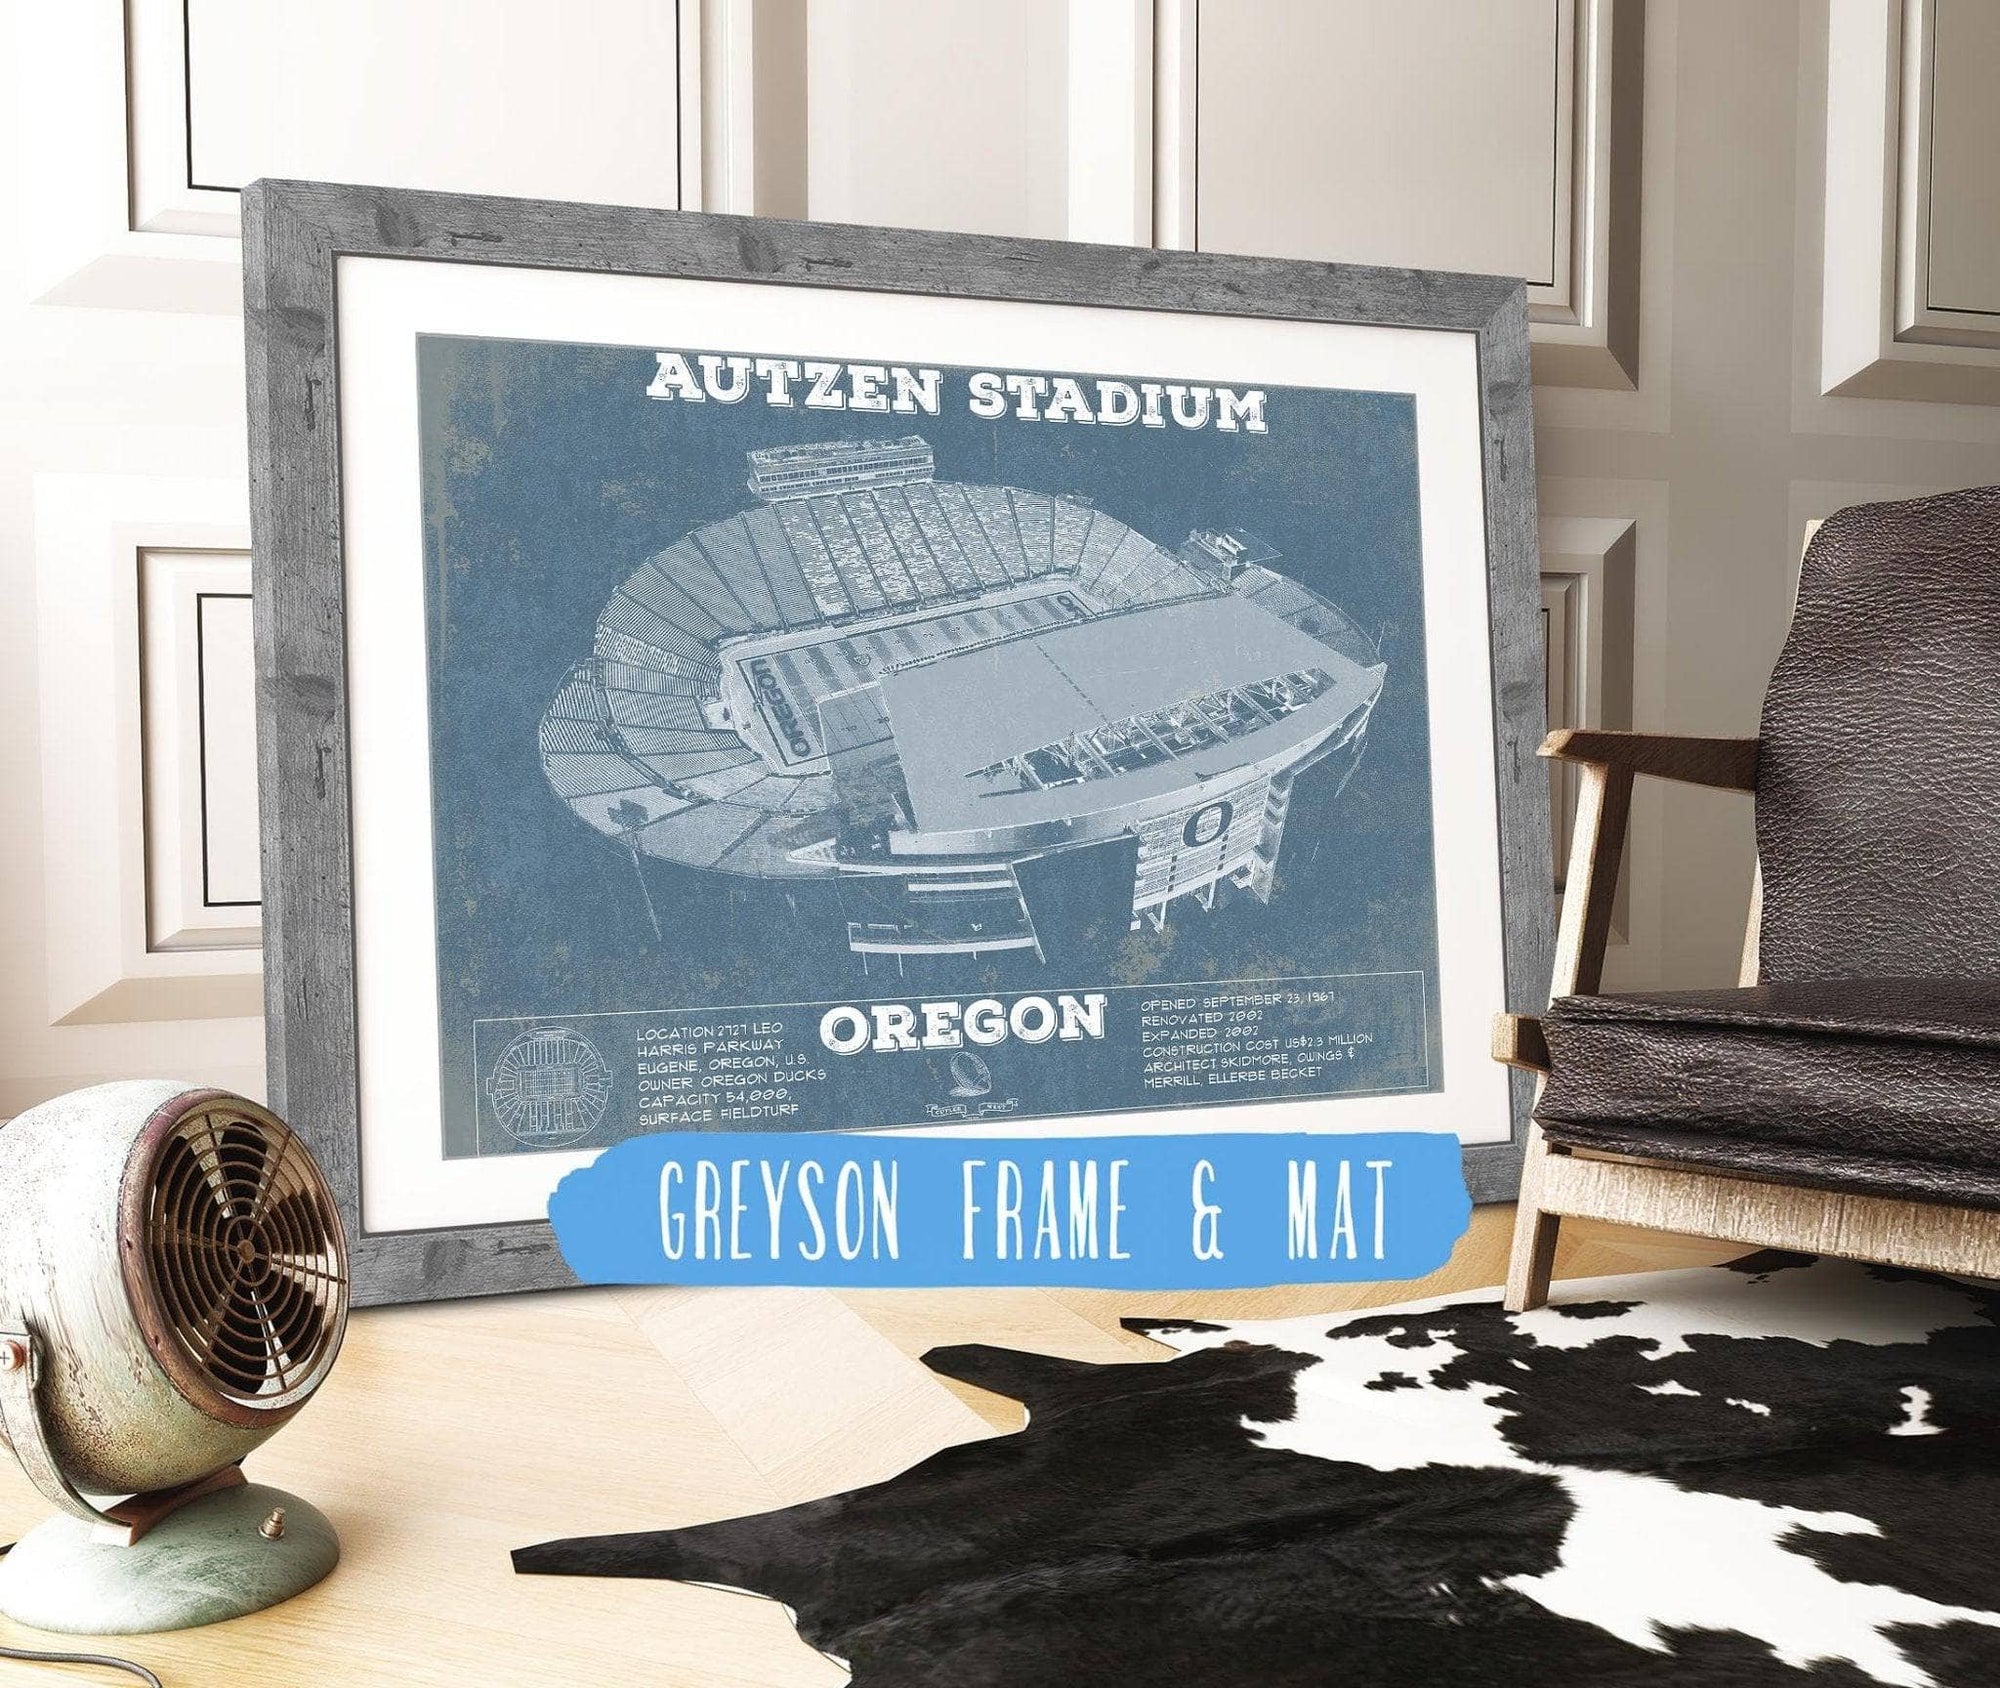 Cutler West College Football Collection 14" x 11" / Greyson Frame & Mat Vintage Autzen Stadium - Oregon Ducks Football Print 704763872-14"-x-11"35809